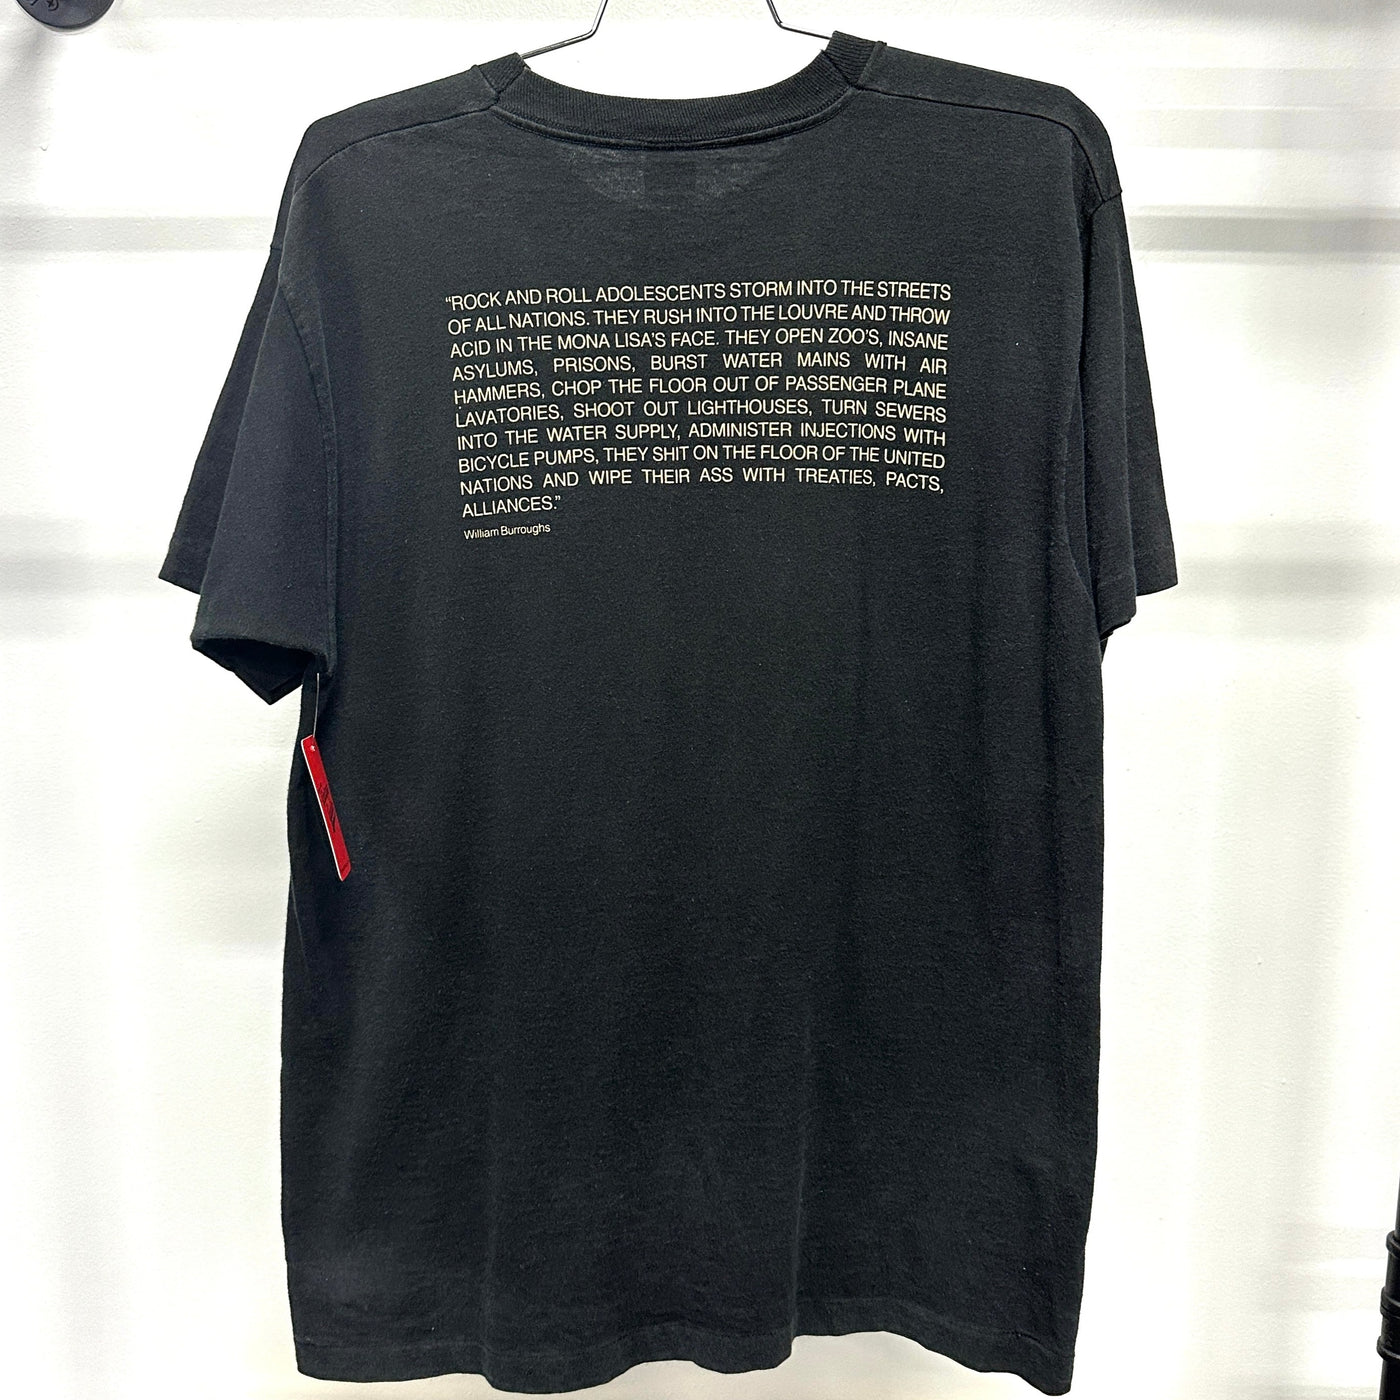 90's WM. Burroughs Black Graphic T-shirt sz XL